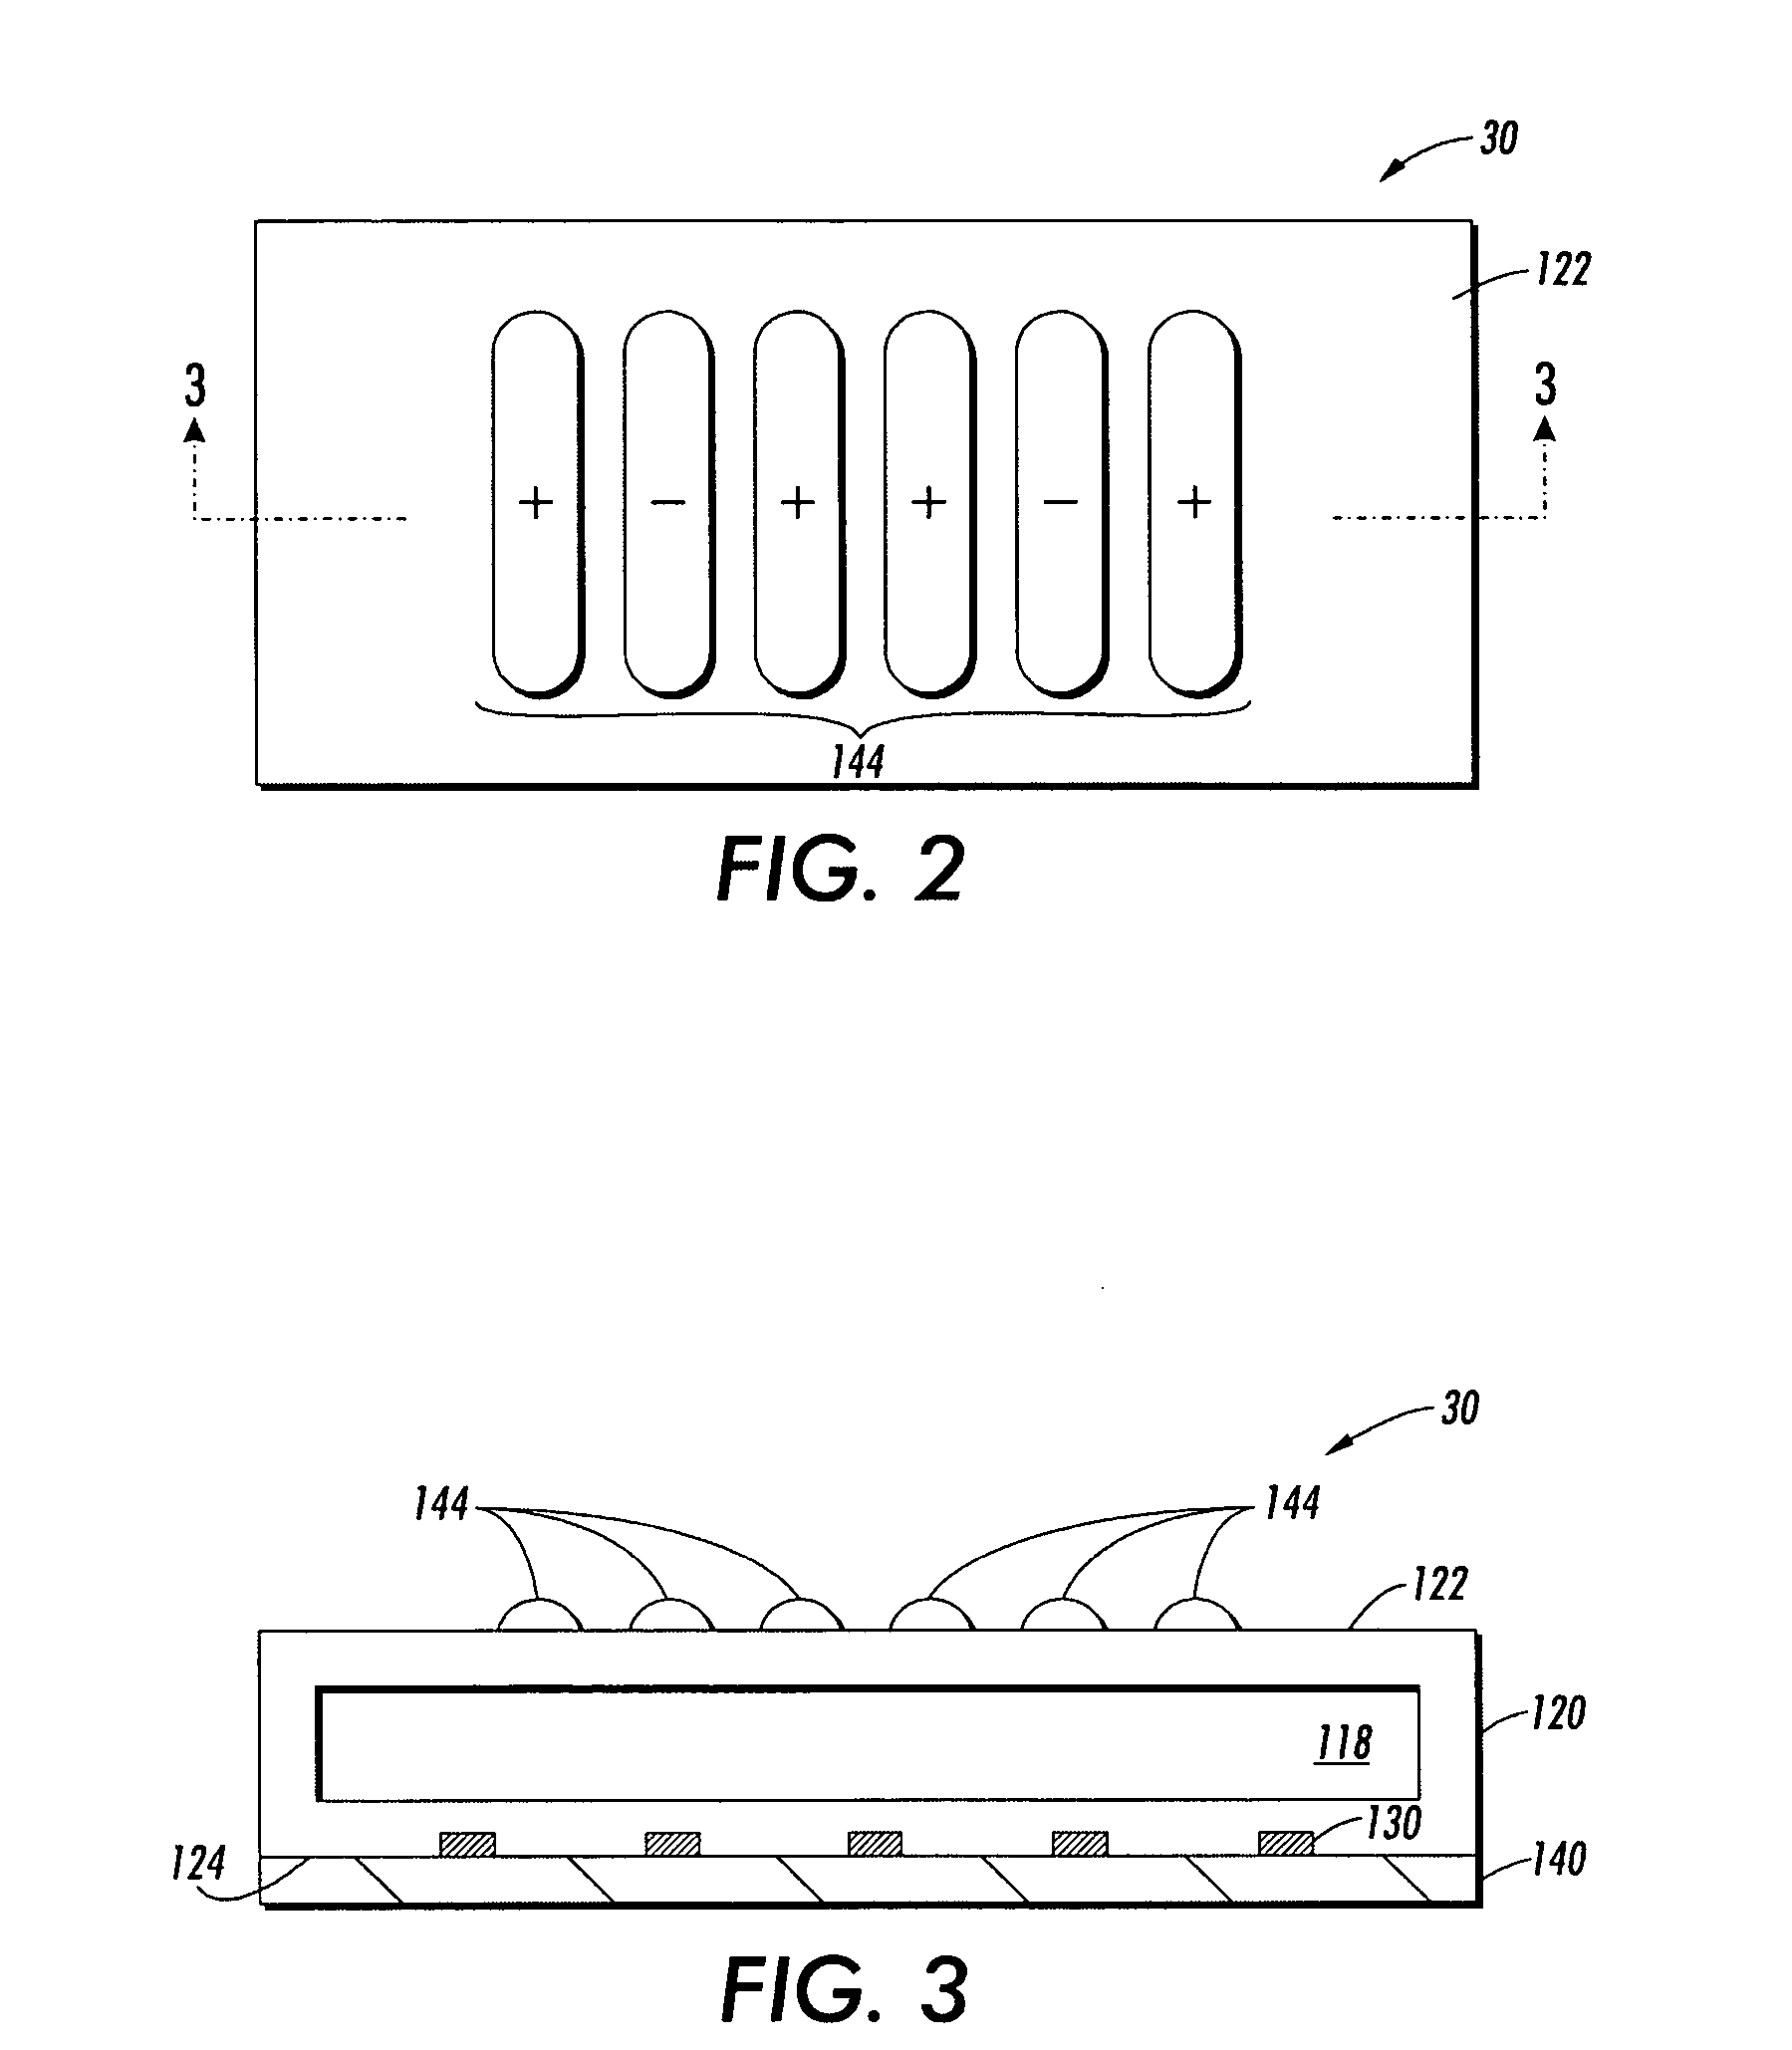 Xerographic micro-assembler